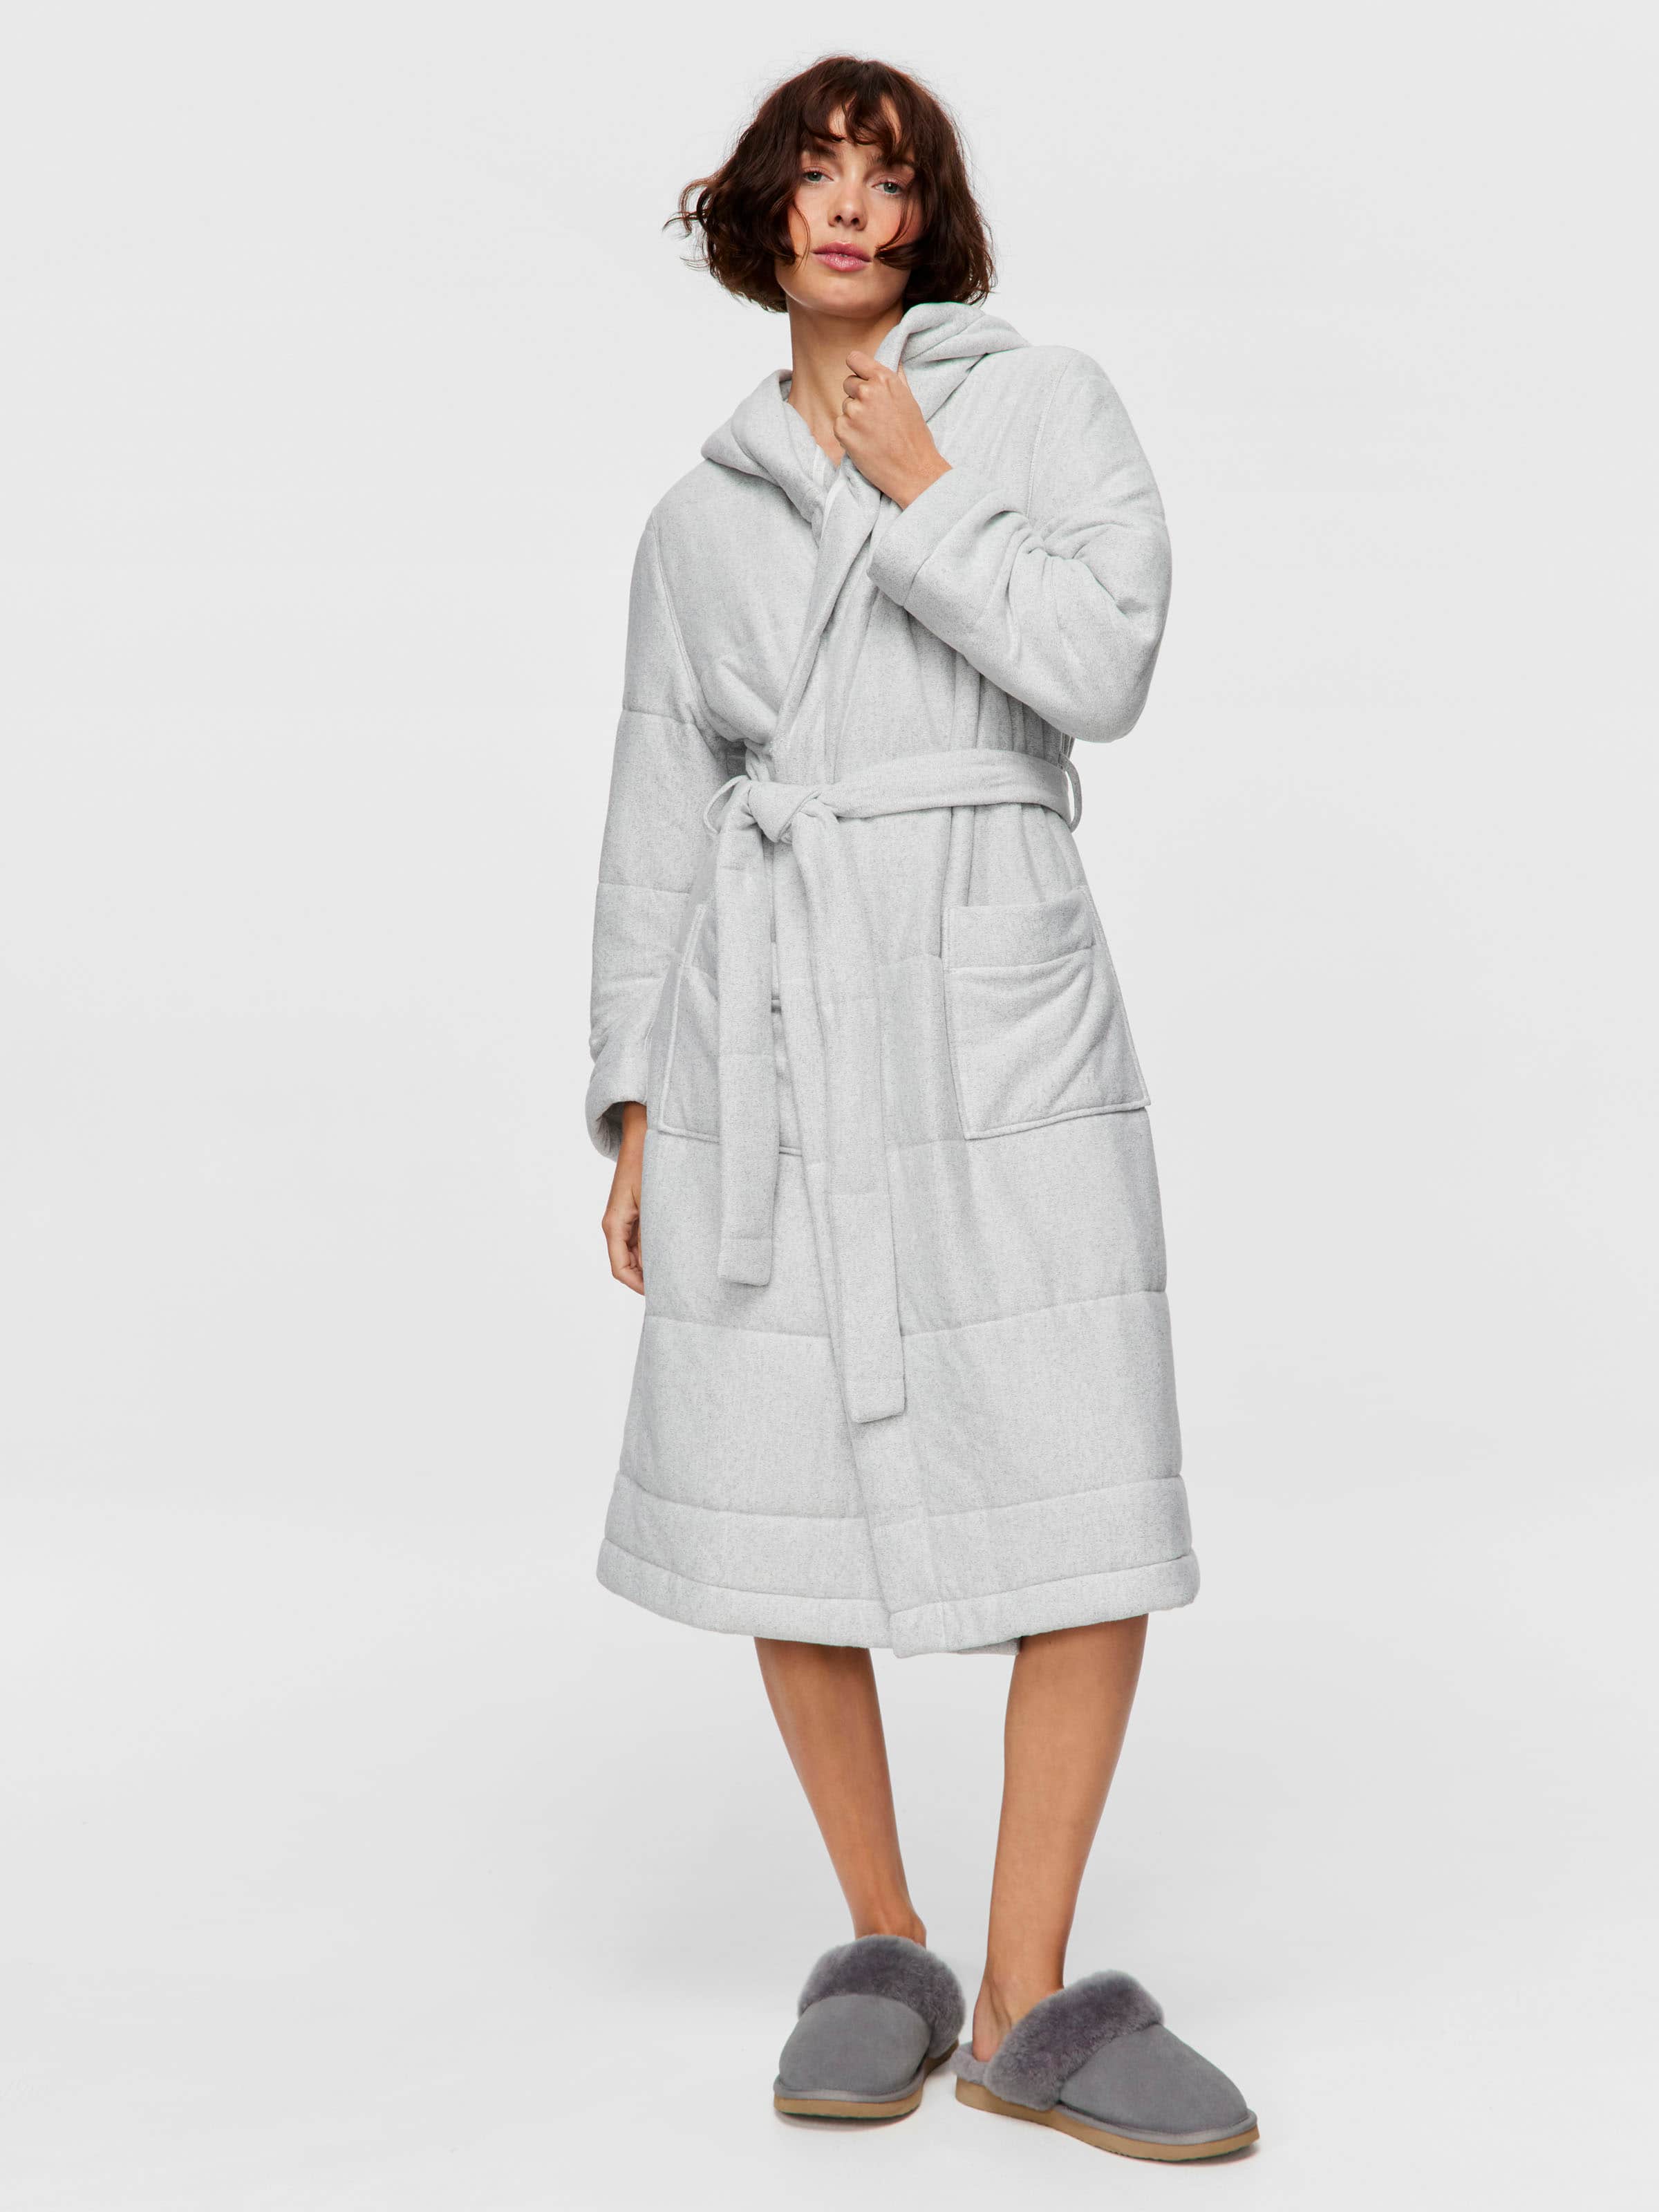 Ladies Thermal Dressing Gown | Heat Holders | Fleece Lined for Winter | No  Hood | eBay